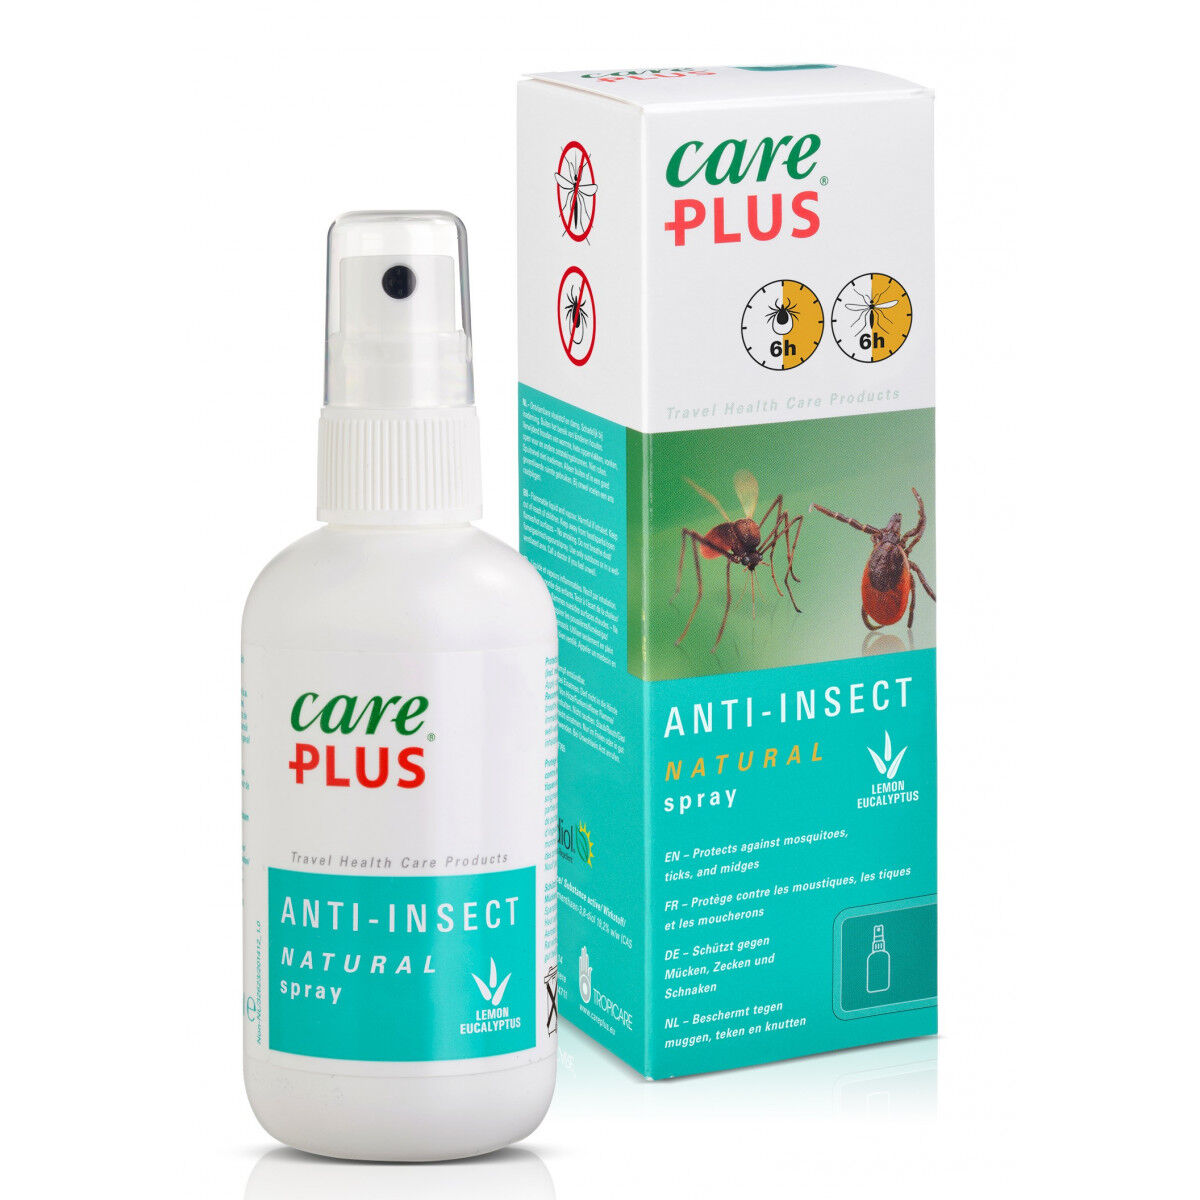 Care Plus Anti-Insect - Natural spray Citriodiol - Insektenschutz